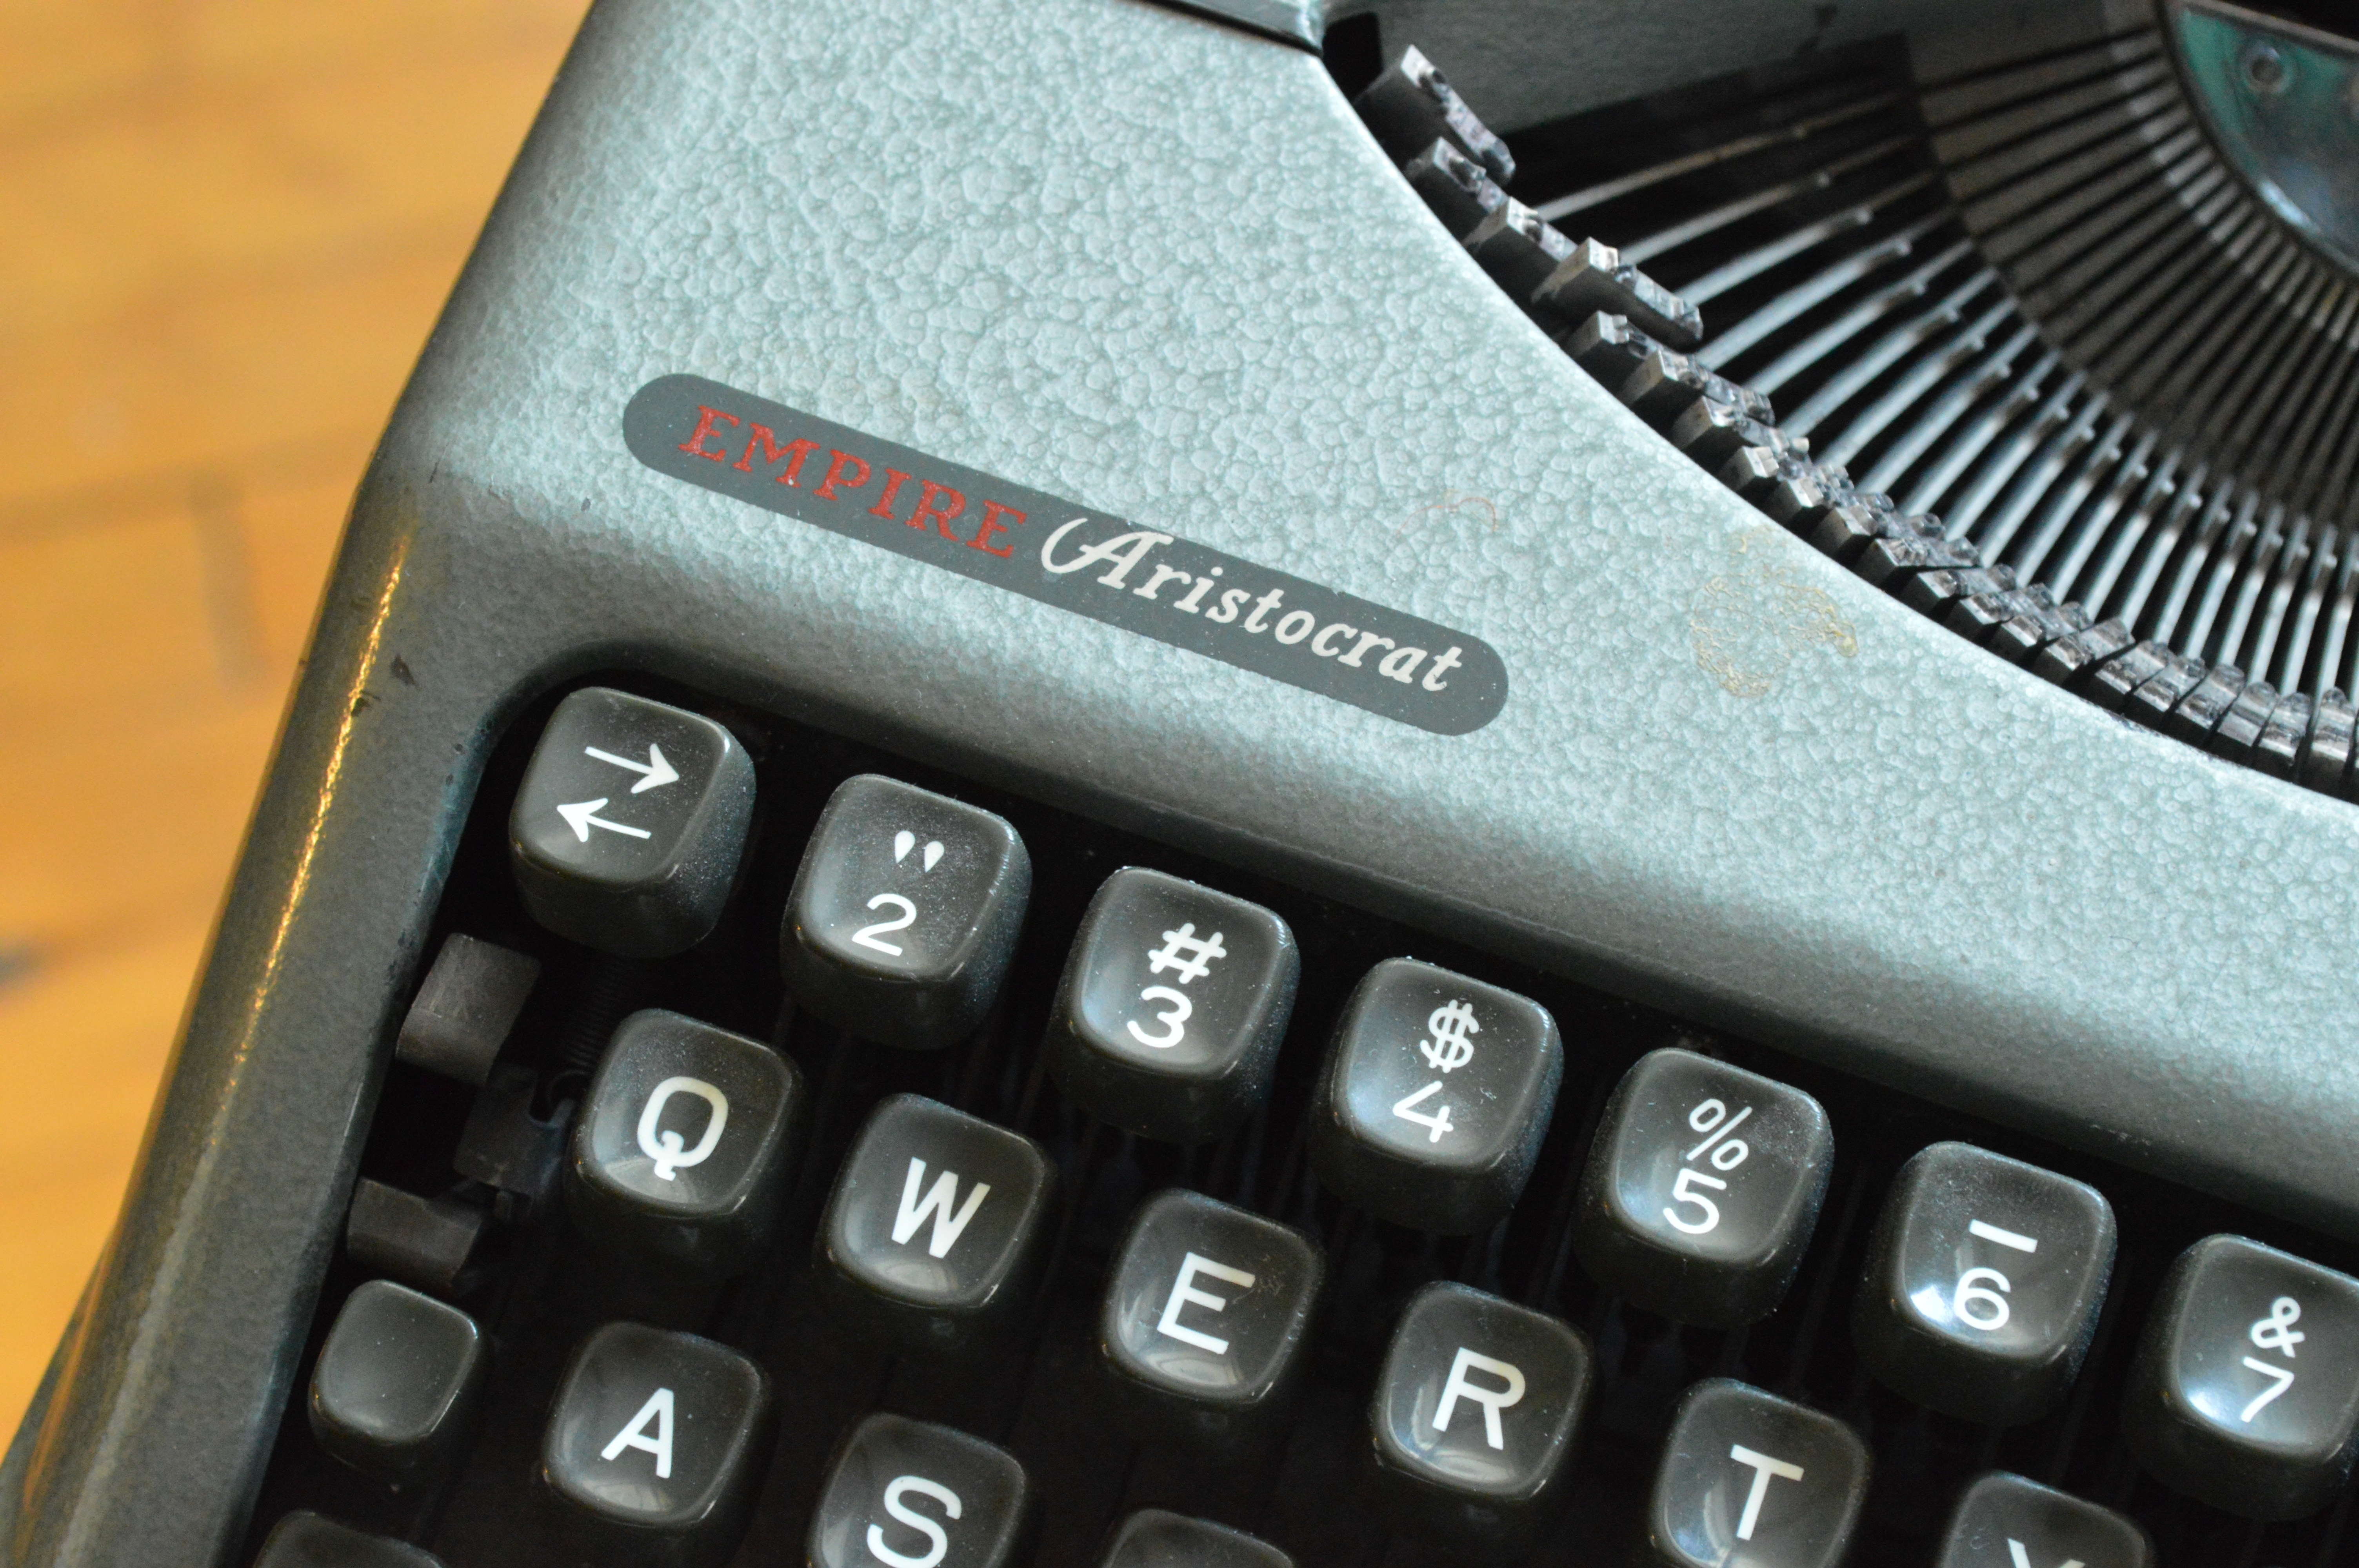 Typewriter, Retro, Machine, Keys, Old, calculator, technology